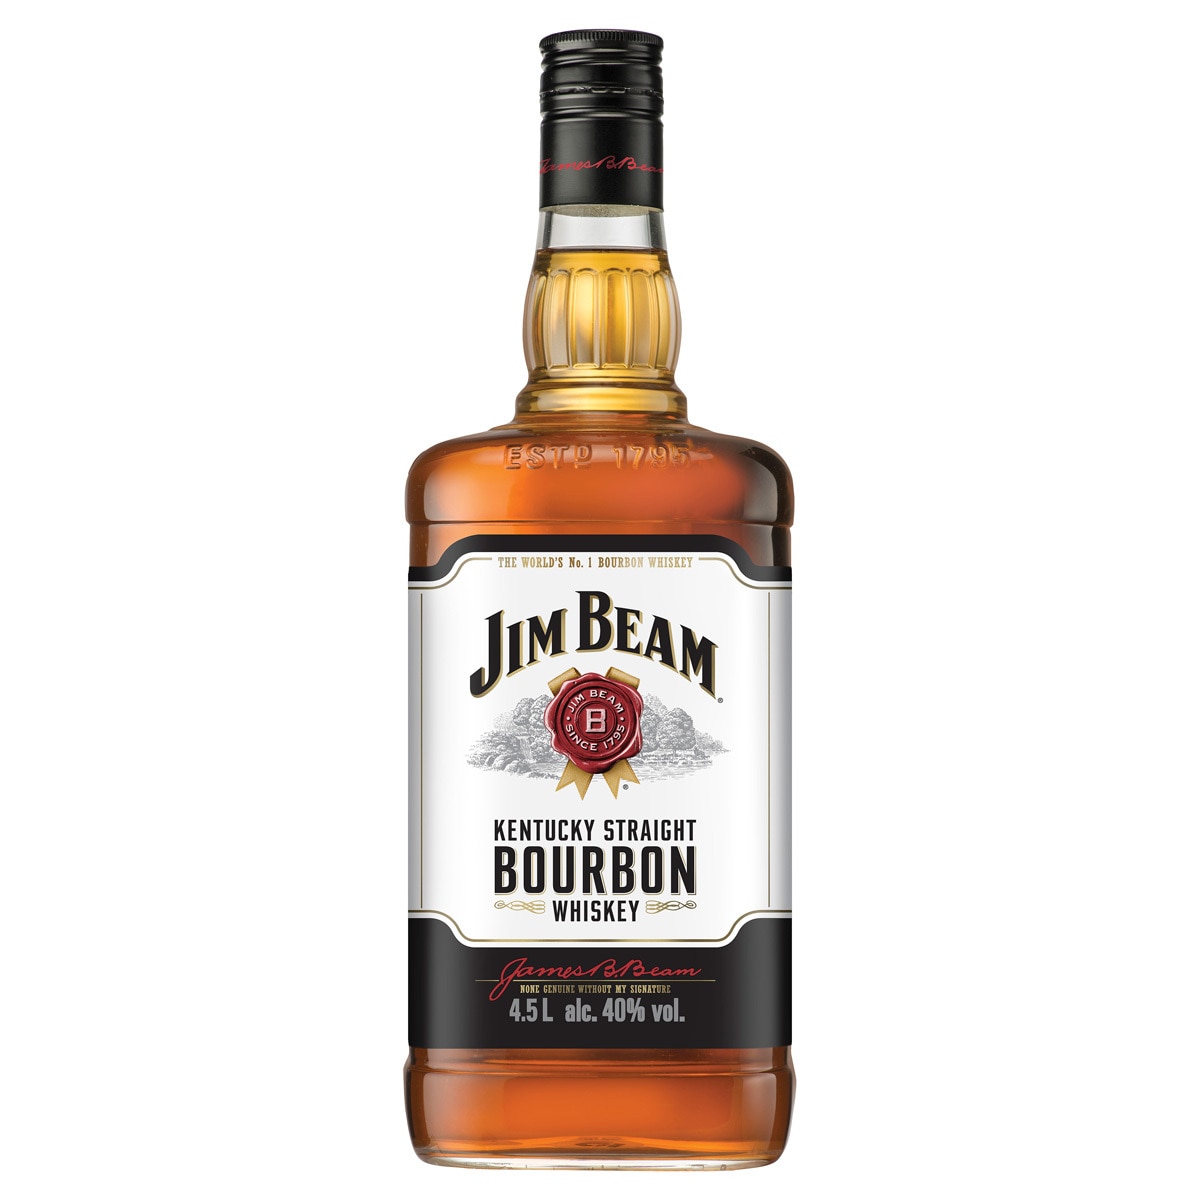 Jim Beam White Label Bourbon Whisky 4.5L